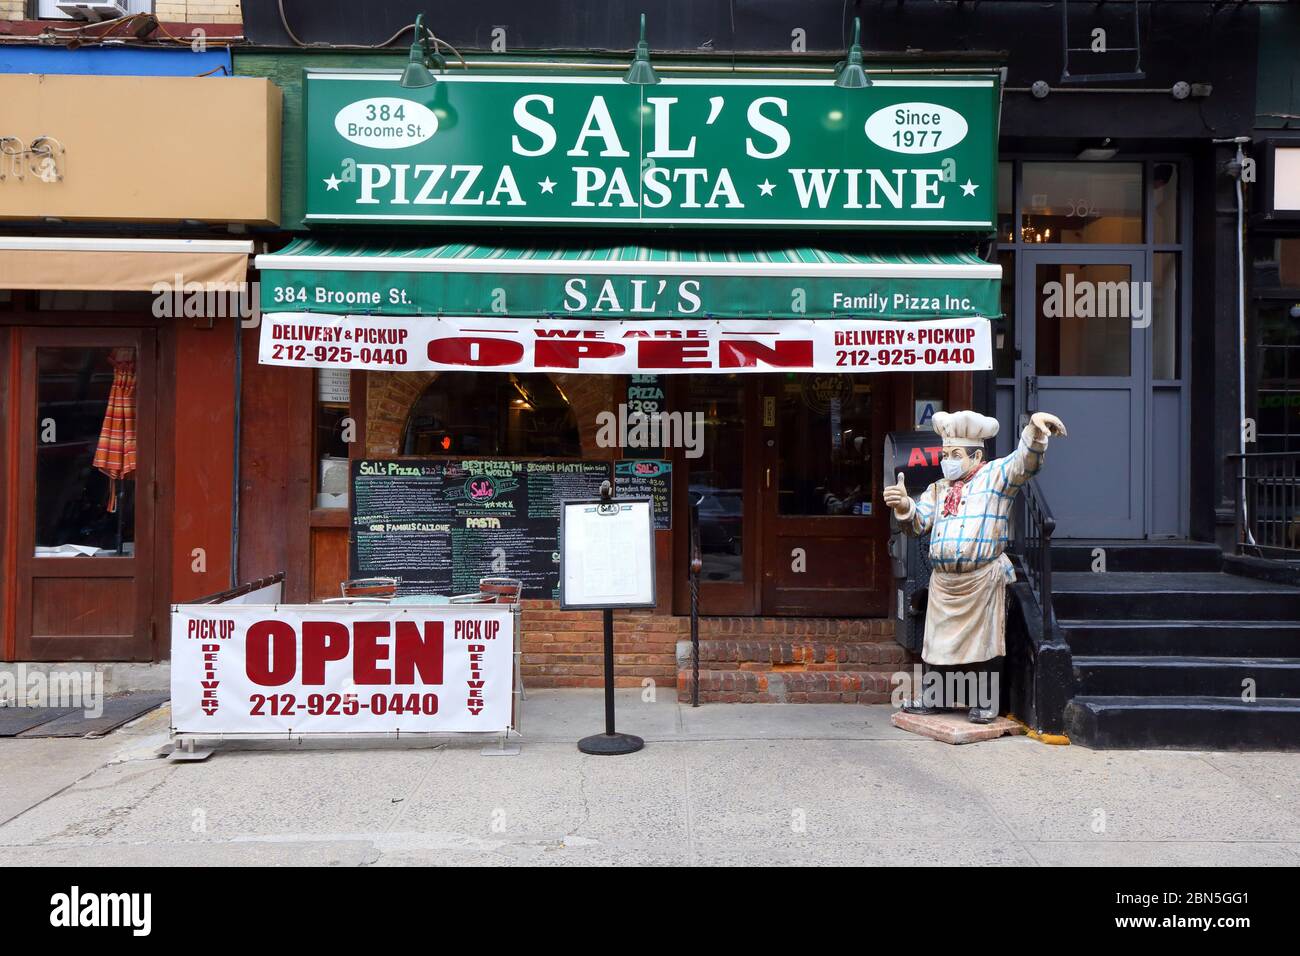 Sal's Little Italy, 384 Broome Street, New York, NYC storefront photo of an Italian restaurant in the Little Italy neighborhood of Manhattan. Stock Photo